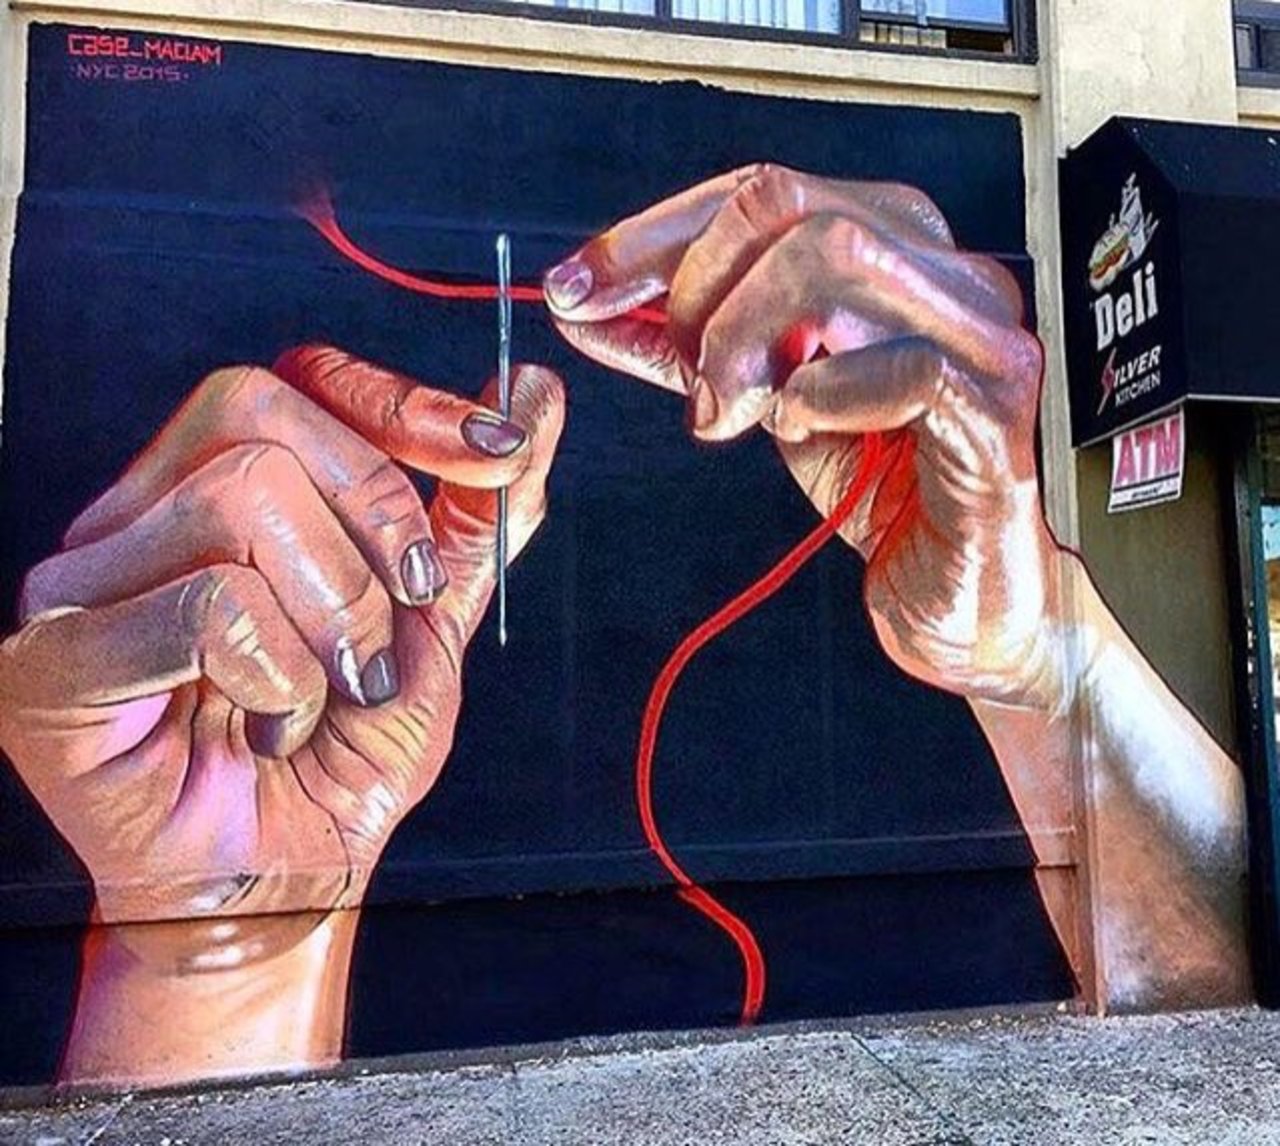 New Street Art by Case Ma'Claim in NYC 

#art #graffiti #mural #streetart https://t.co/VhQKPWyVz0